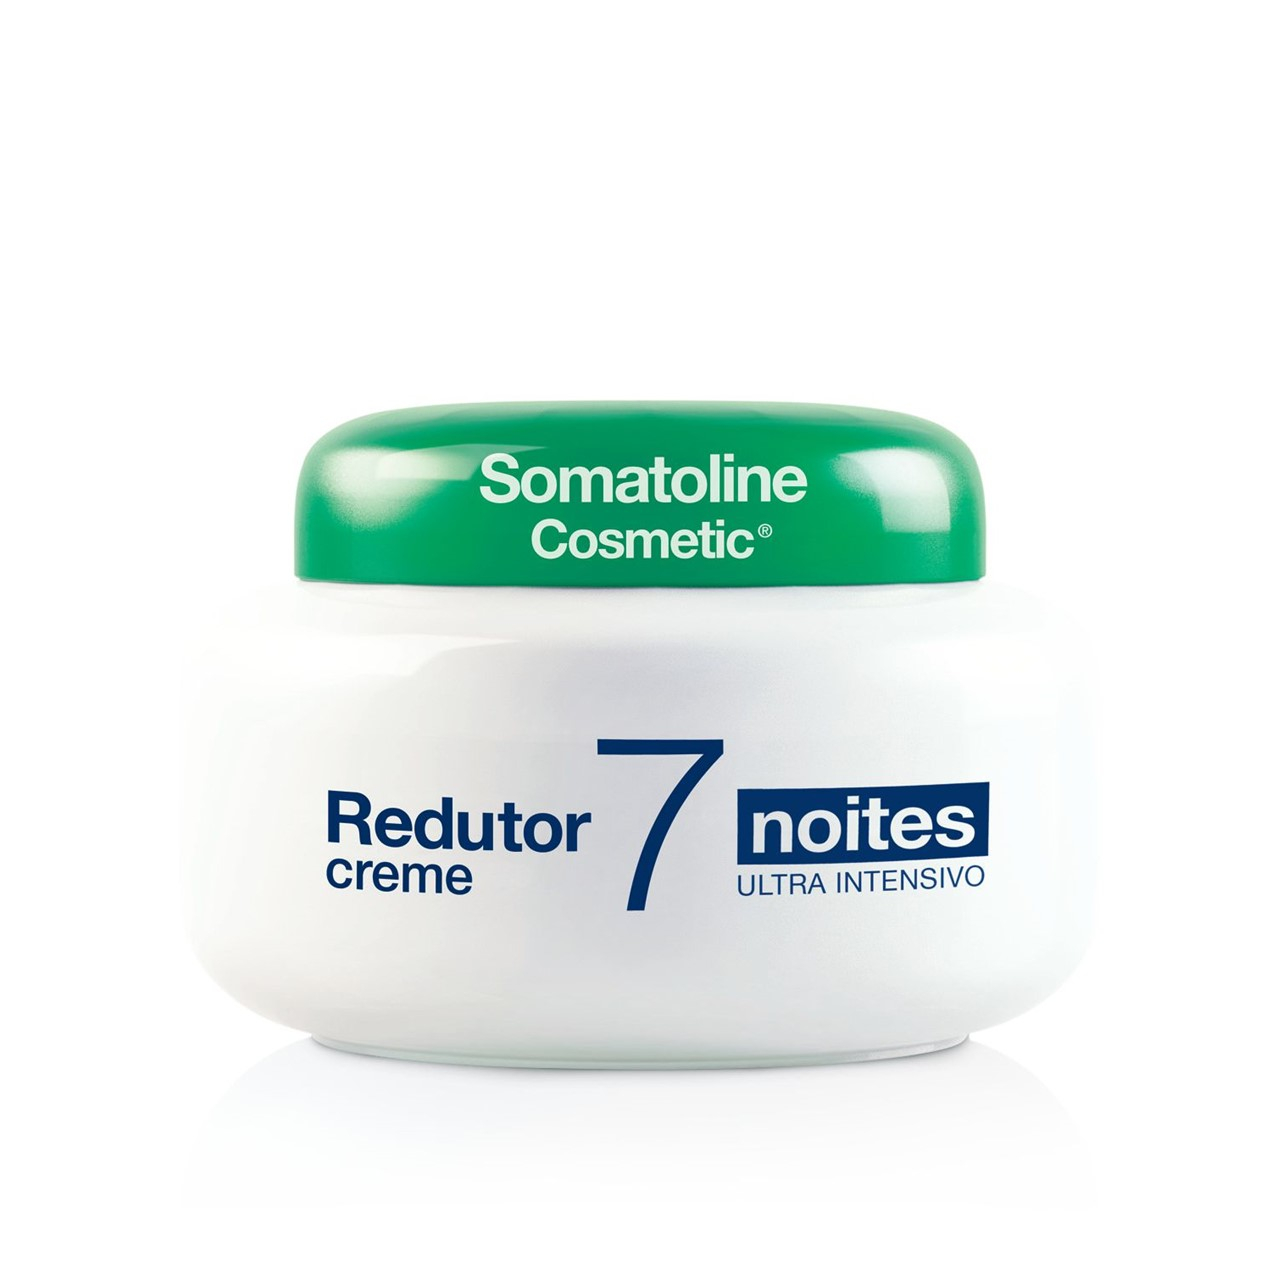 Somatoline Cosmetic Slimming 7 Nights Ultra Intensive Cream 400ml (13.53fl oz)